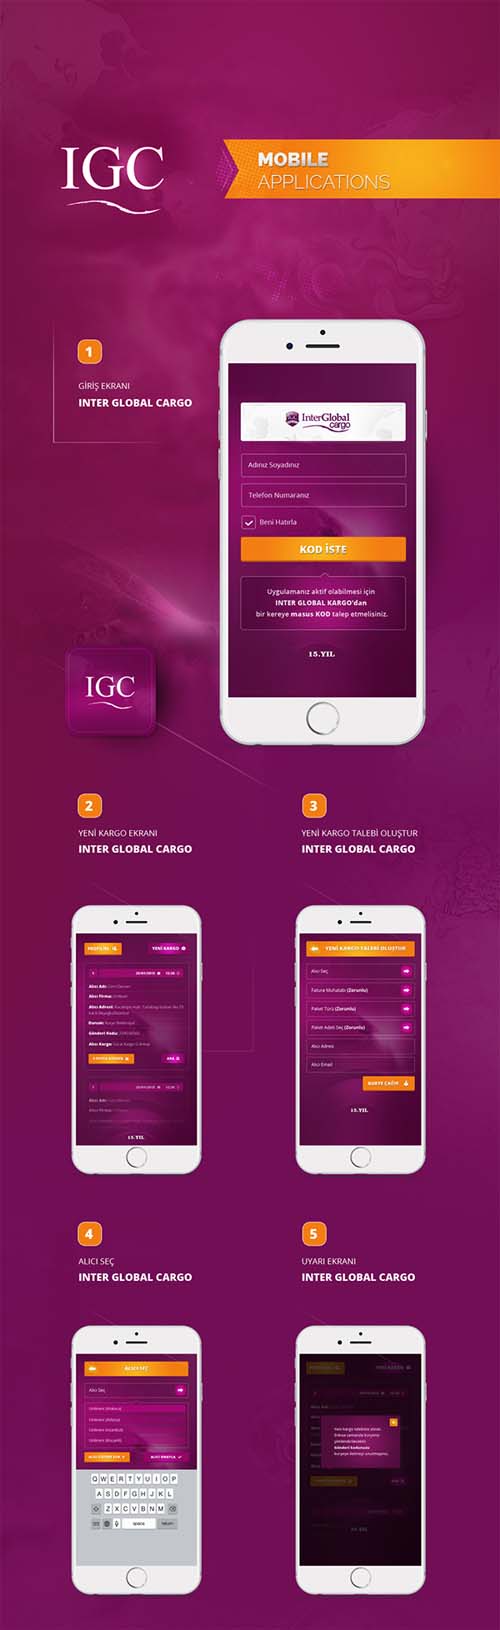 IGC-Mobile Application Design